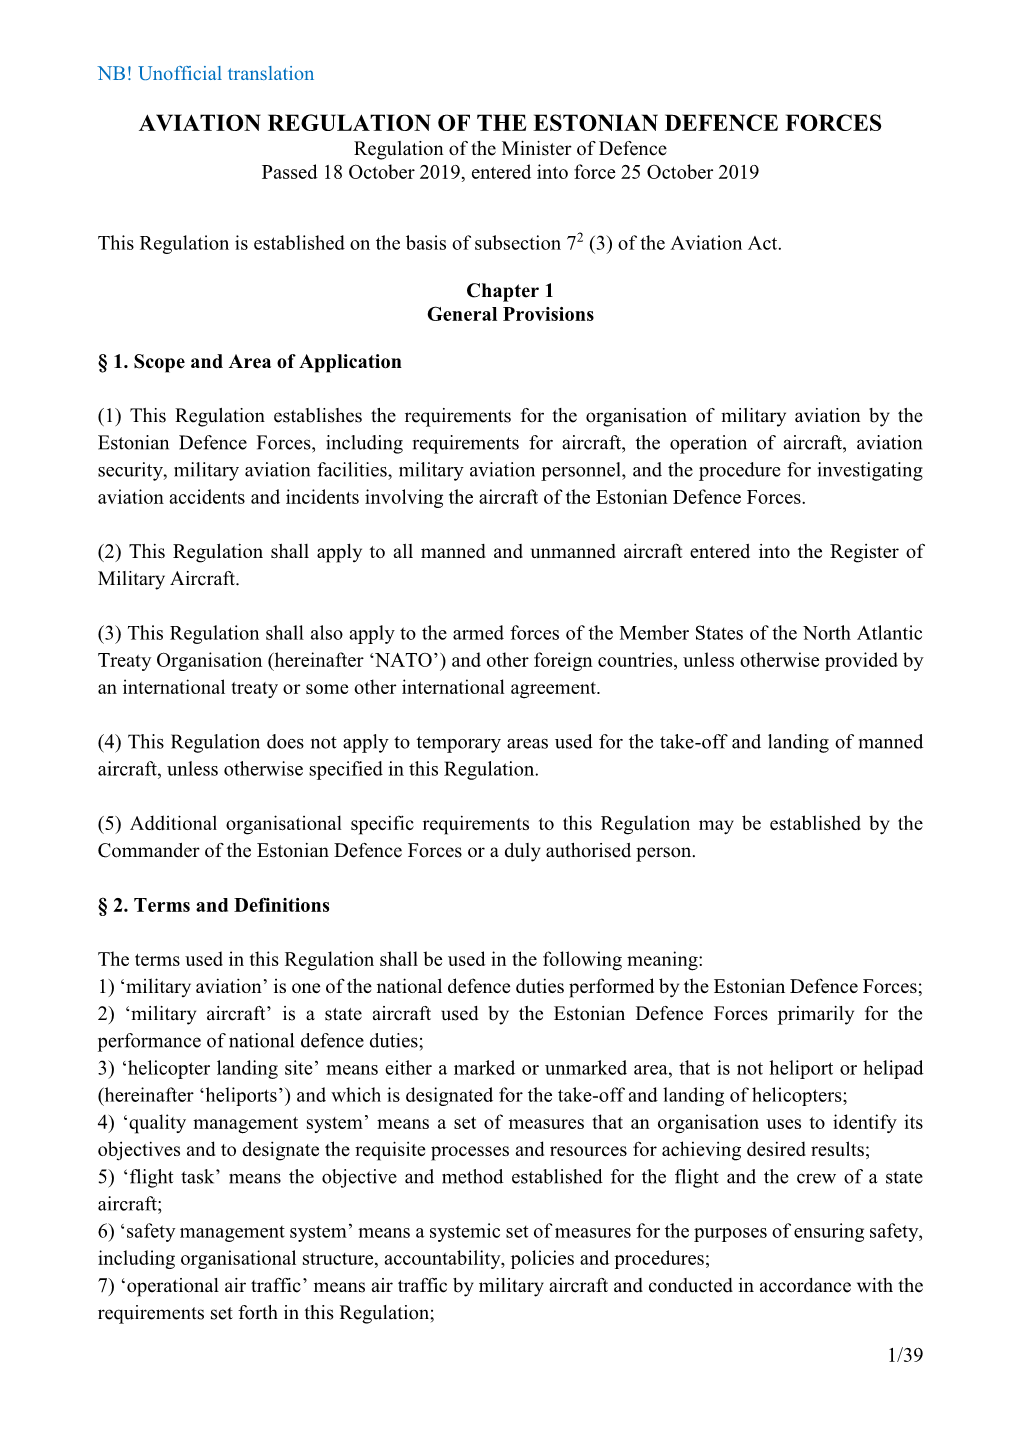 AVIATION REGULATION of the ESTONIAN DEFENCE FORCES Regulation of the Minister of Defence Passed 18 October 2019, Entered Into Force 25 October 2019